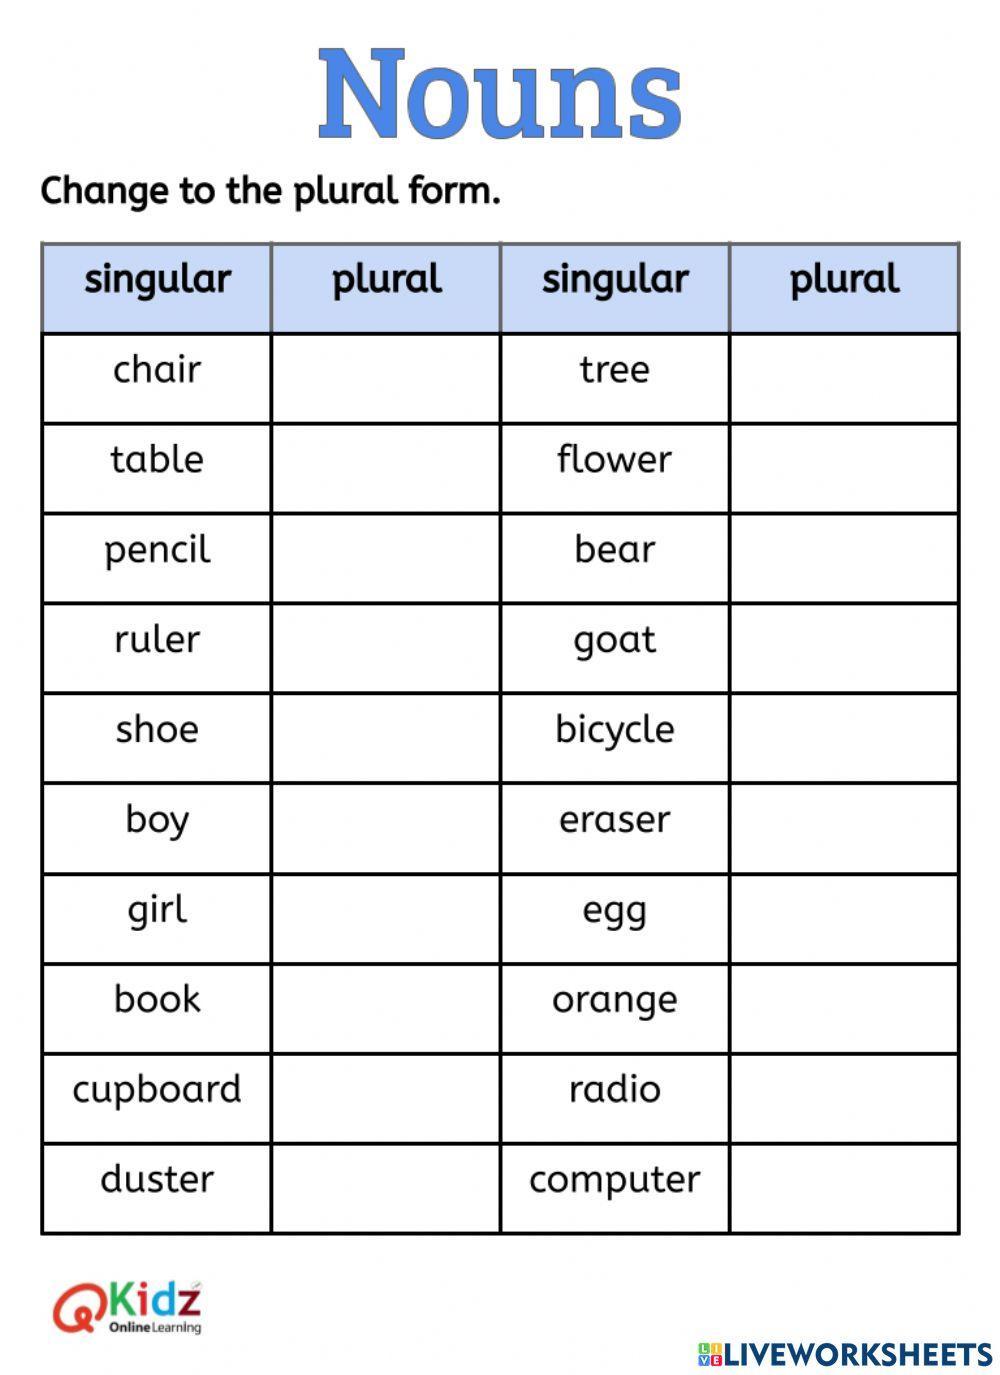 Nouns - Singular & Plural form